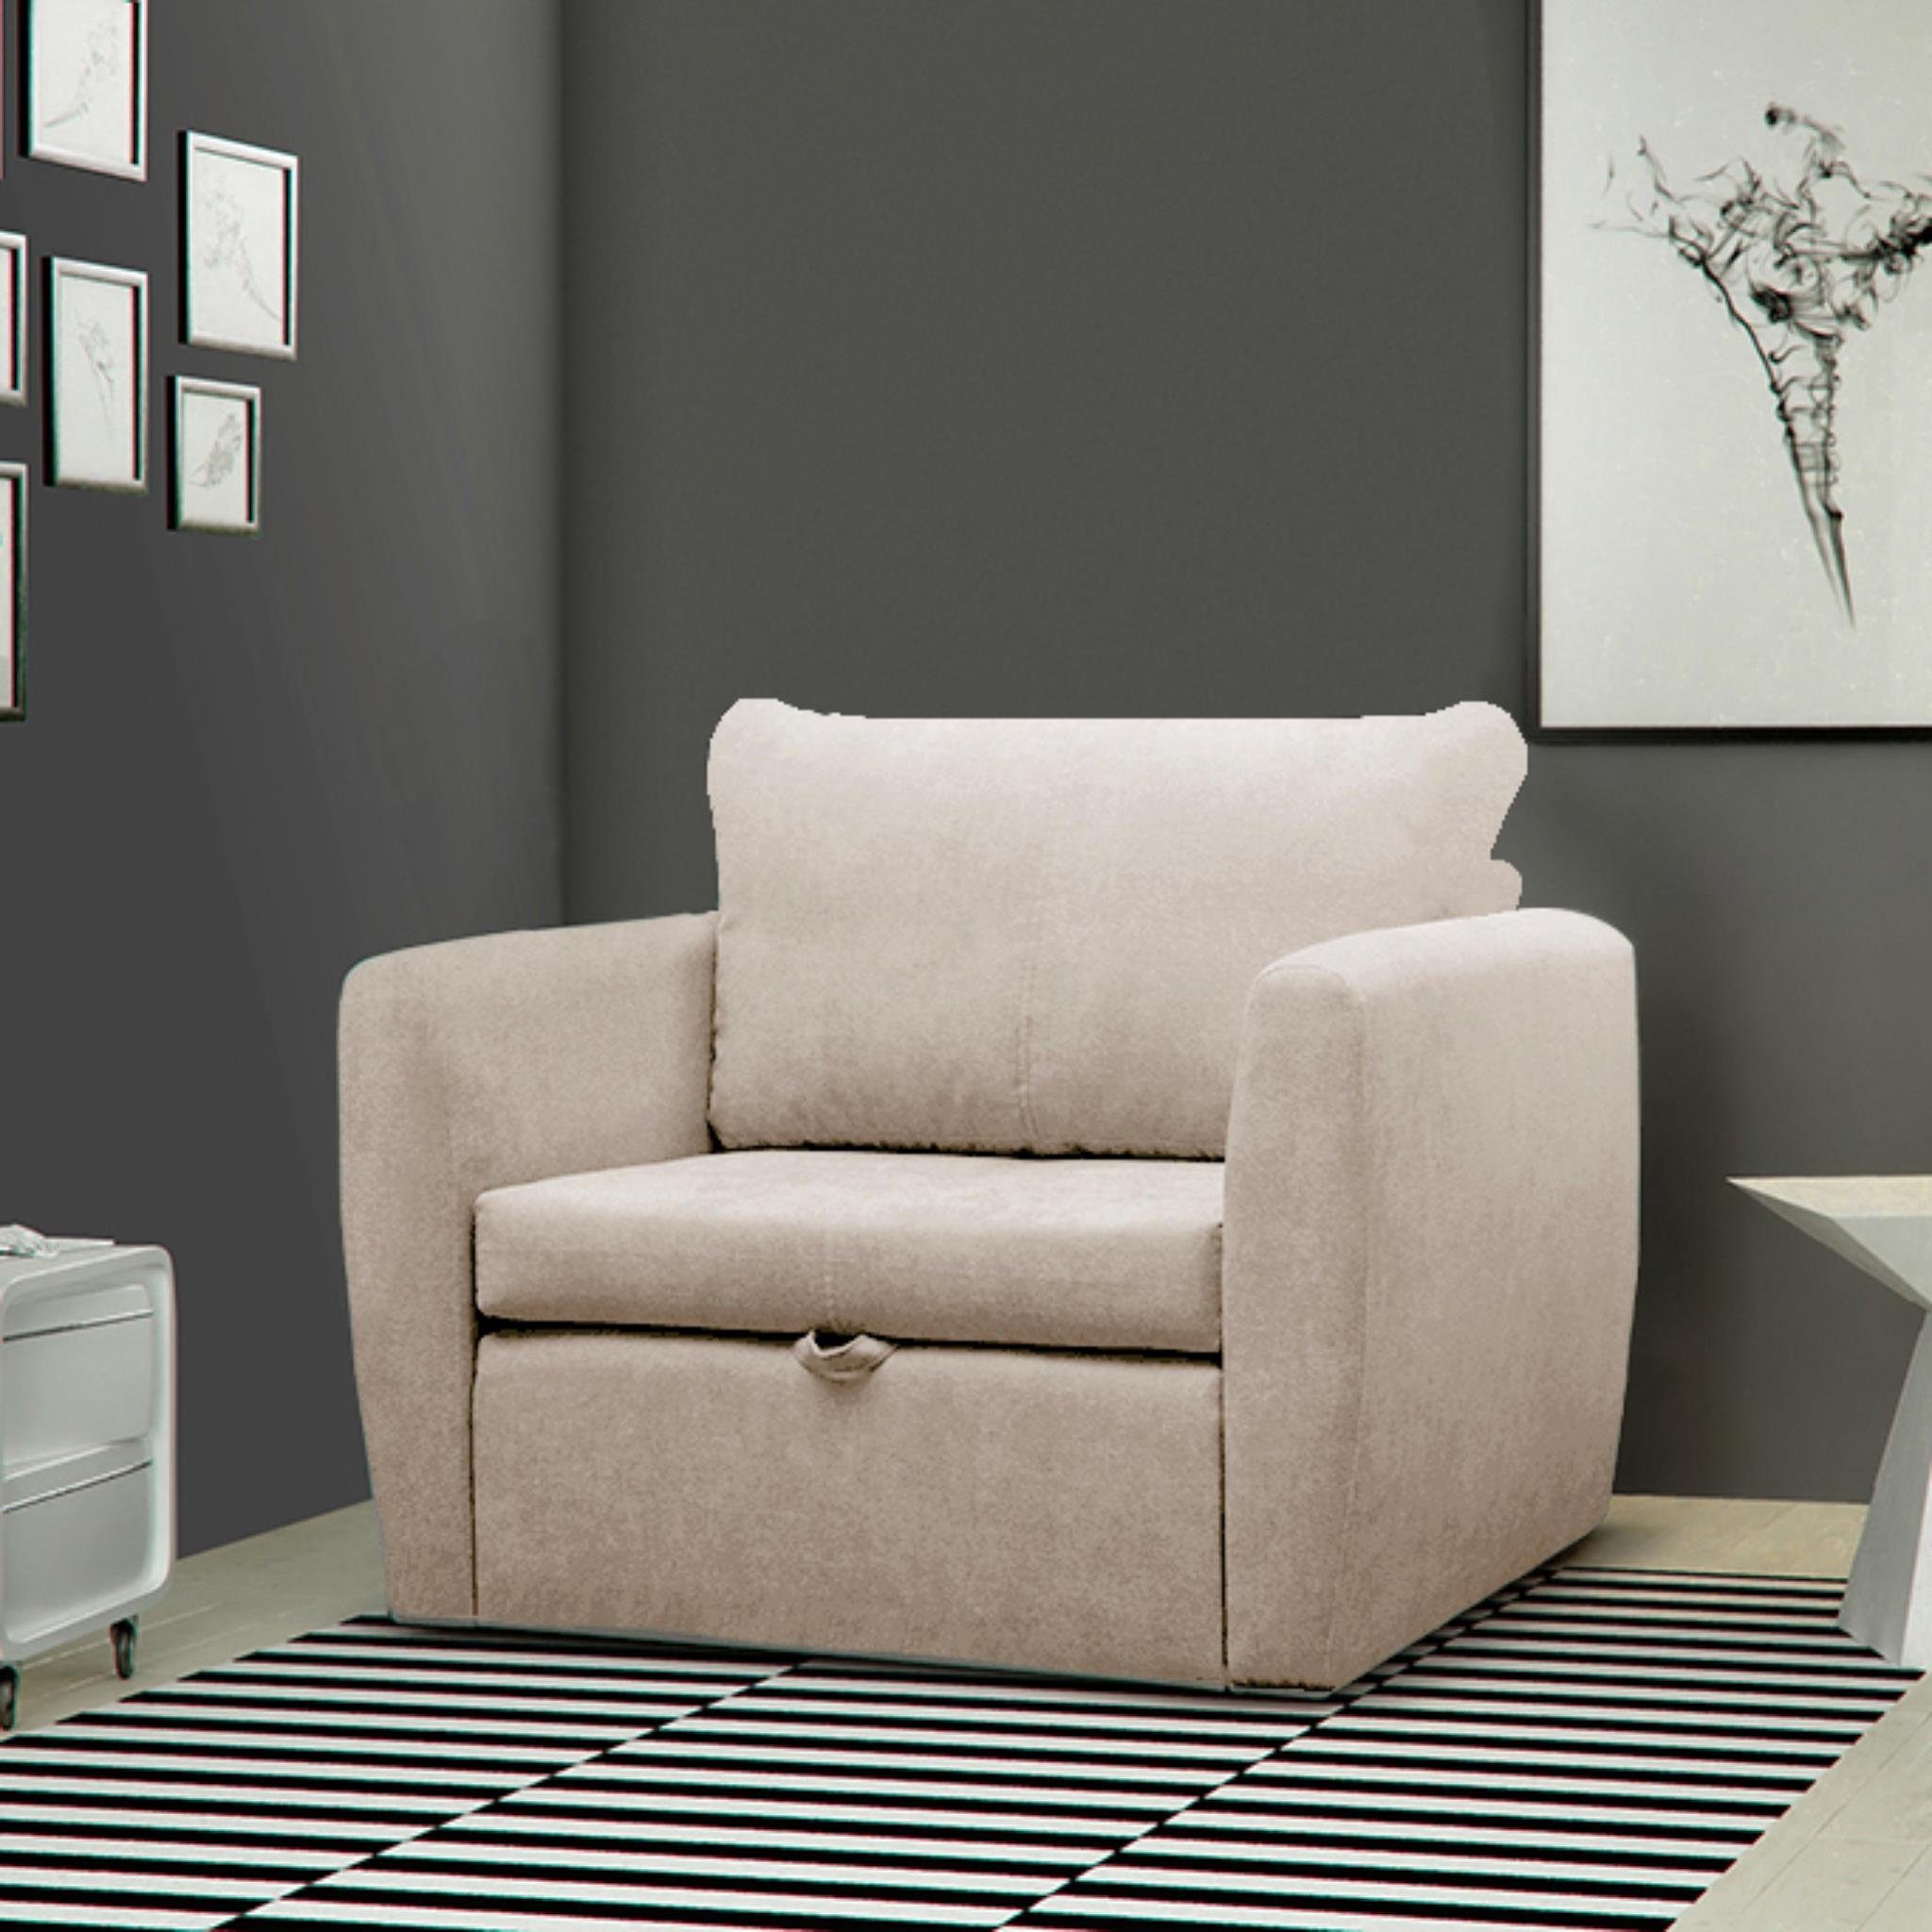 Beautysofa Relaxsessel Kamel (Modern 1-Sitzer Sofa, Wohnzimmersessel), mit Schlaffunktion, Bettkasten, Polstersessel Cappucino (alfa 03)